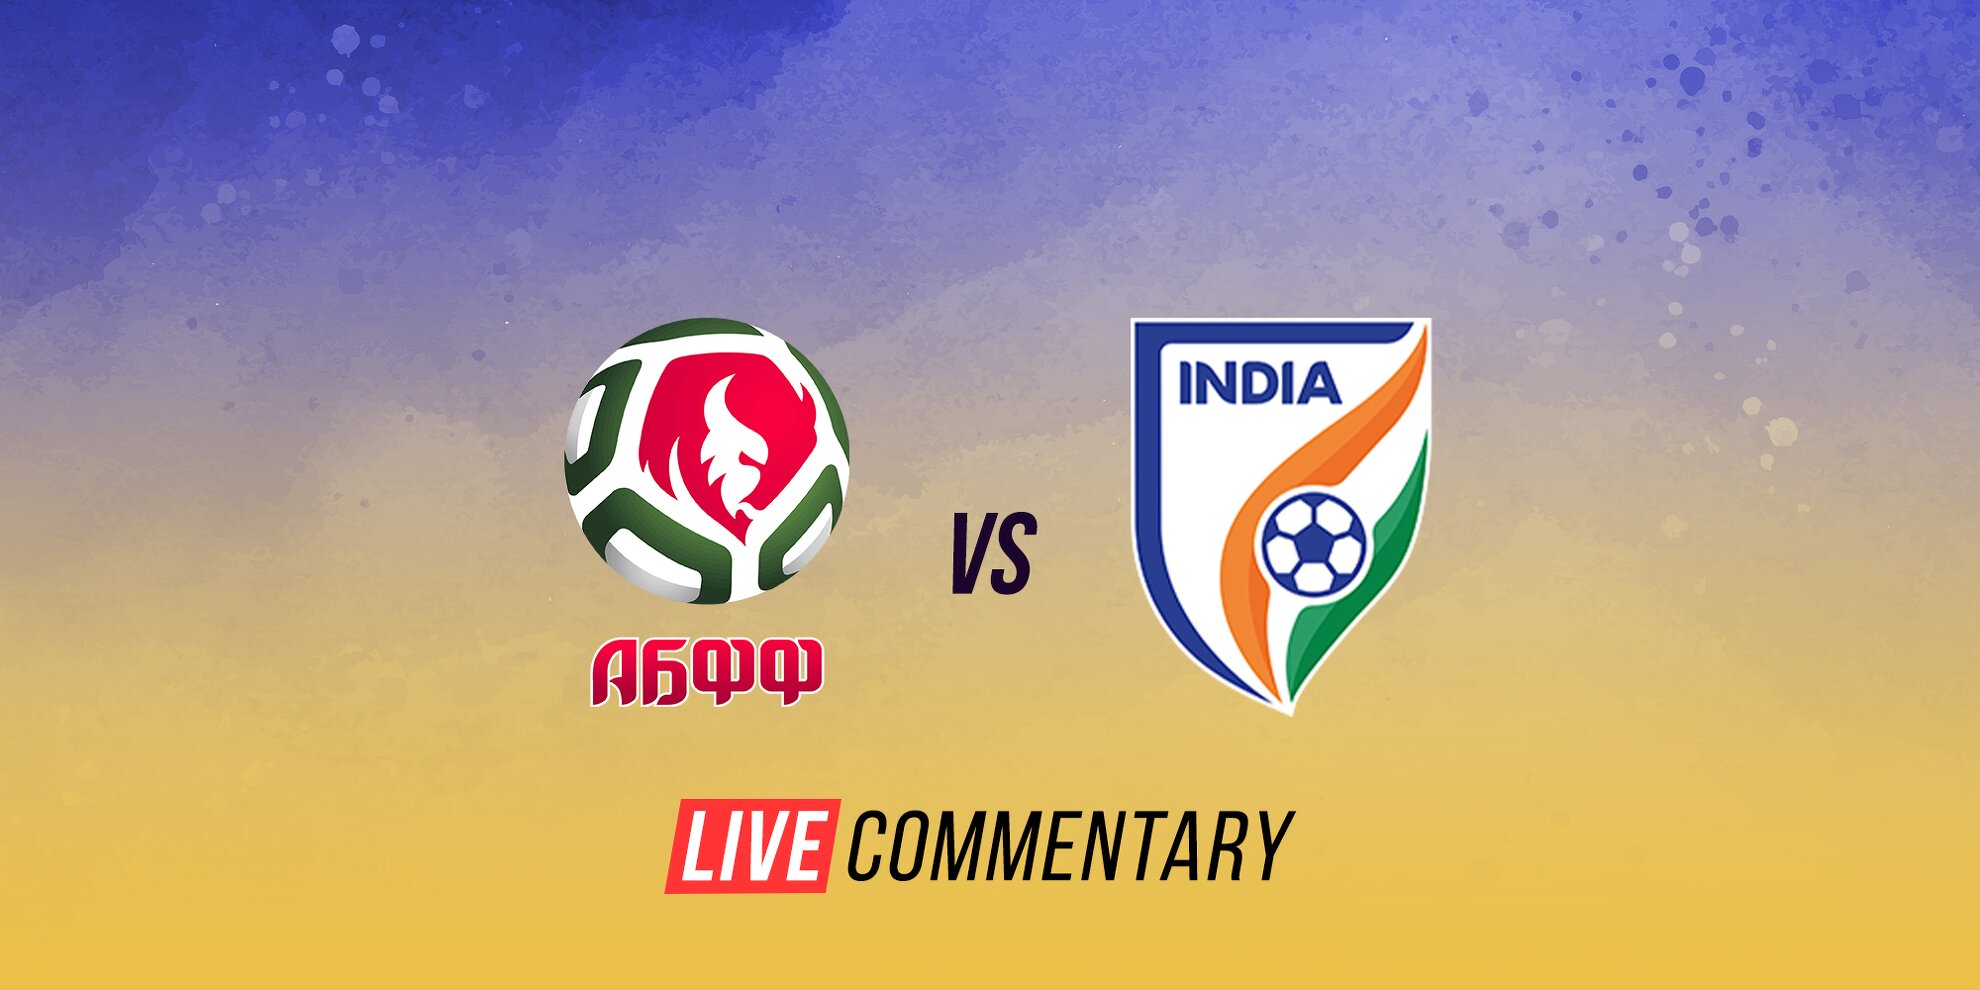 Belarus vs India Live Comm